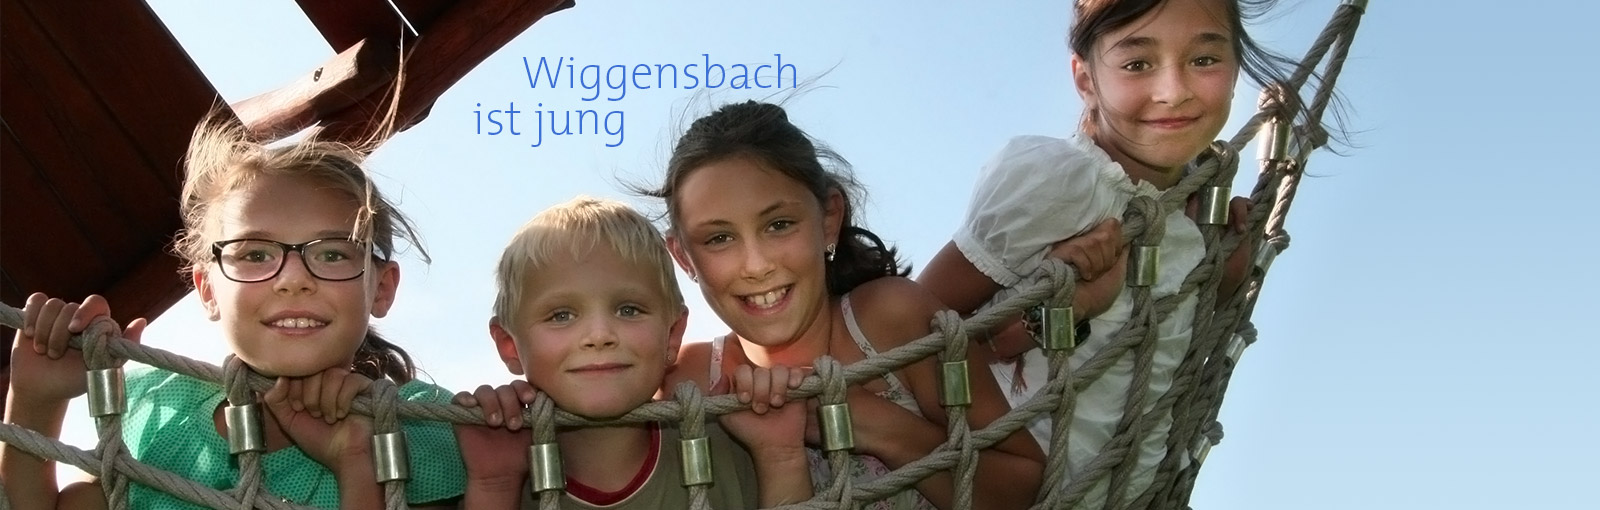 Wiggensbach ist jung